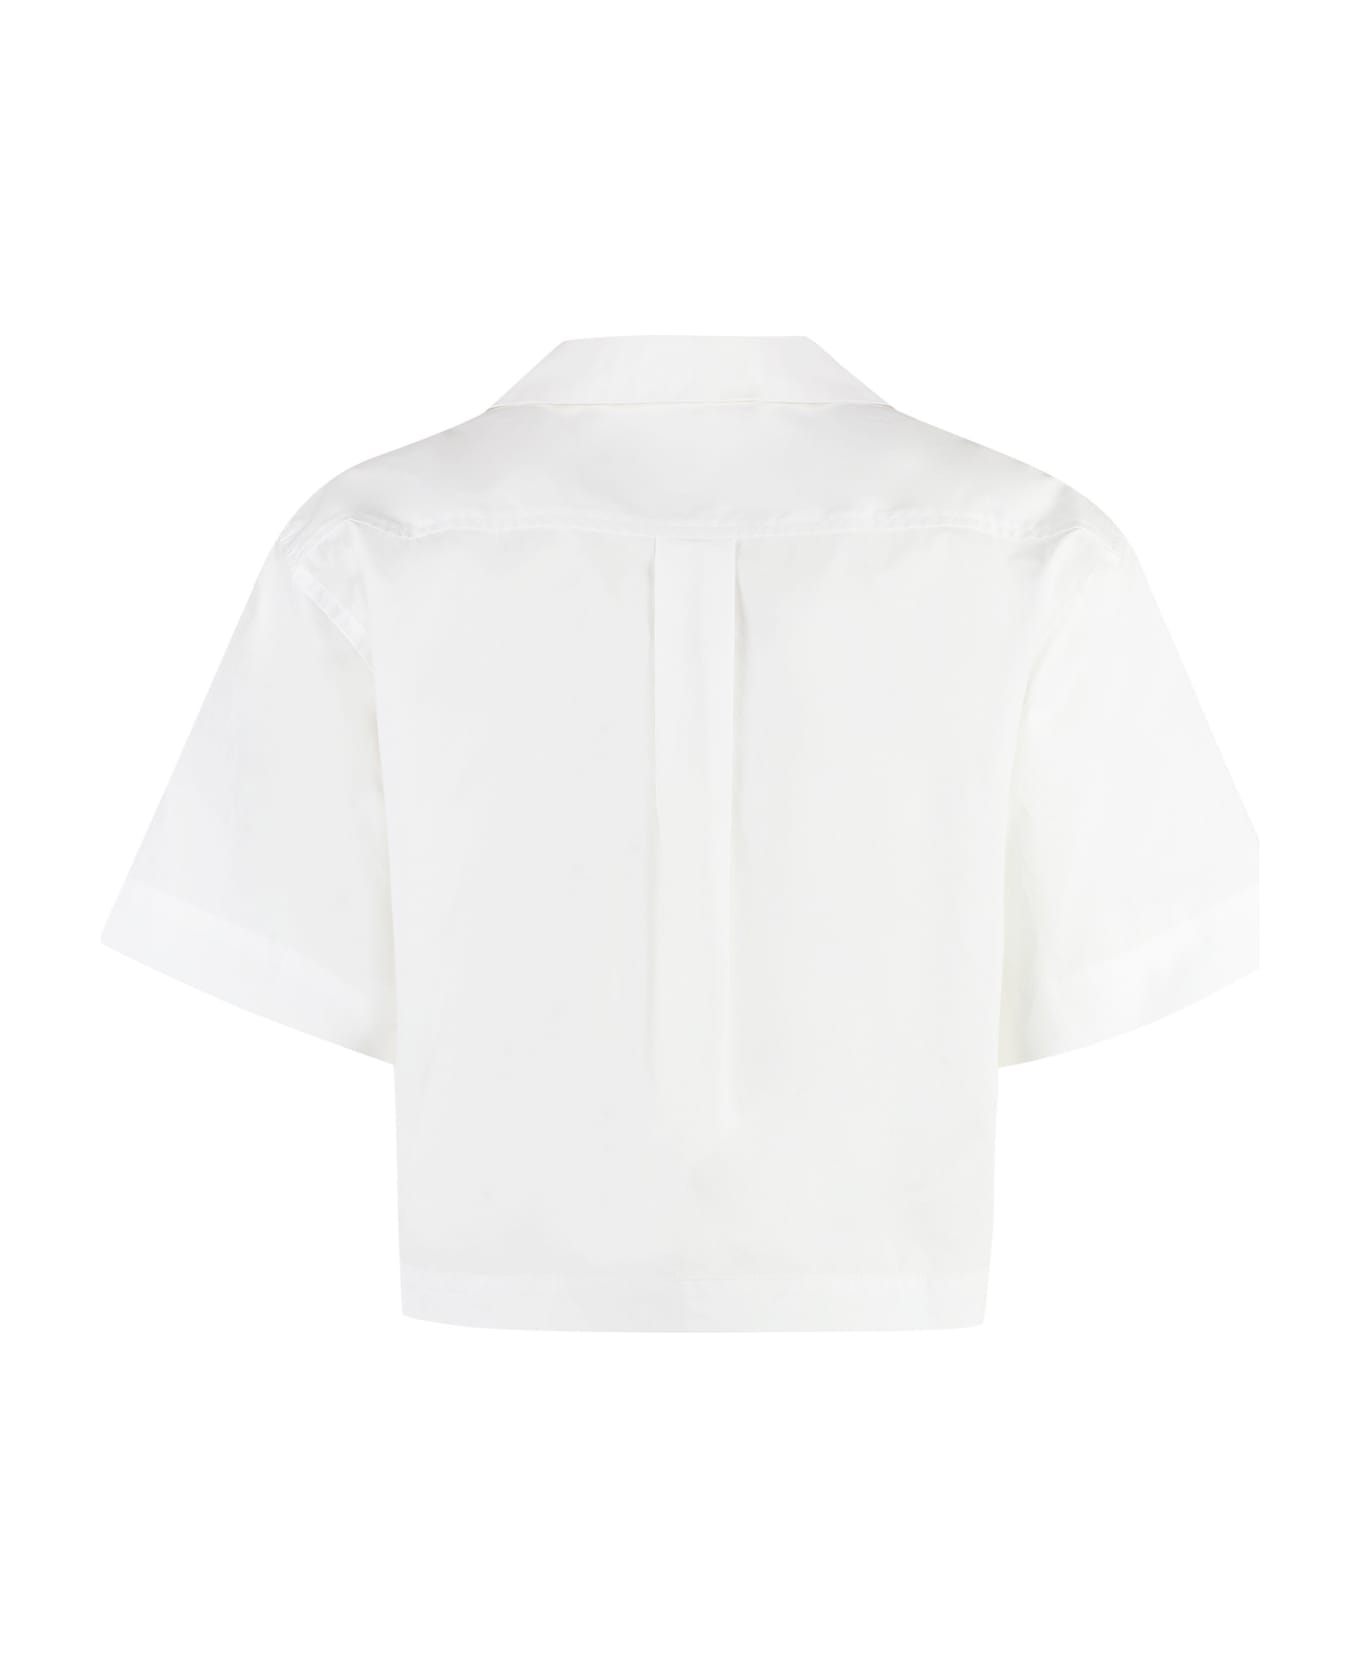 Equipment Short Sleeve Cotton Shirt - White